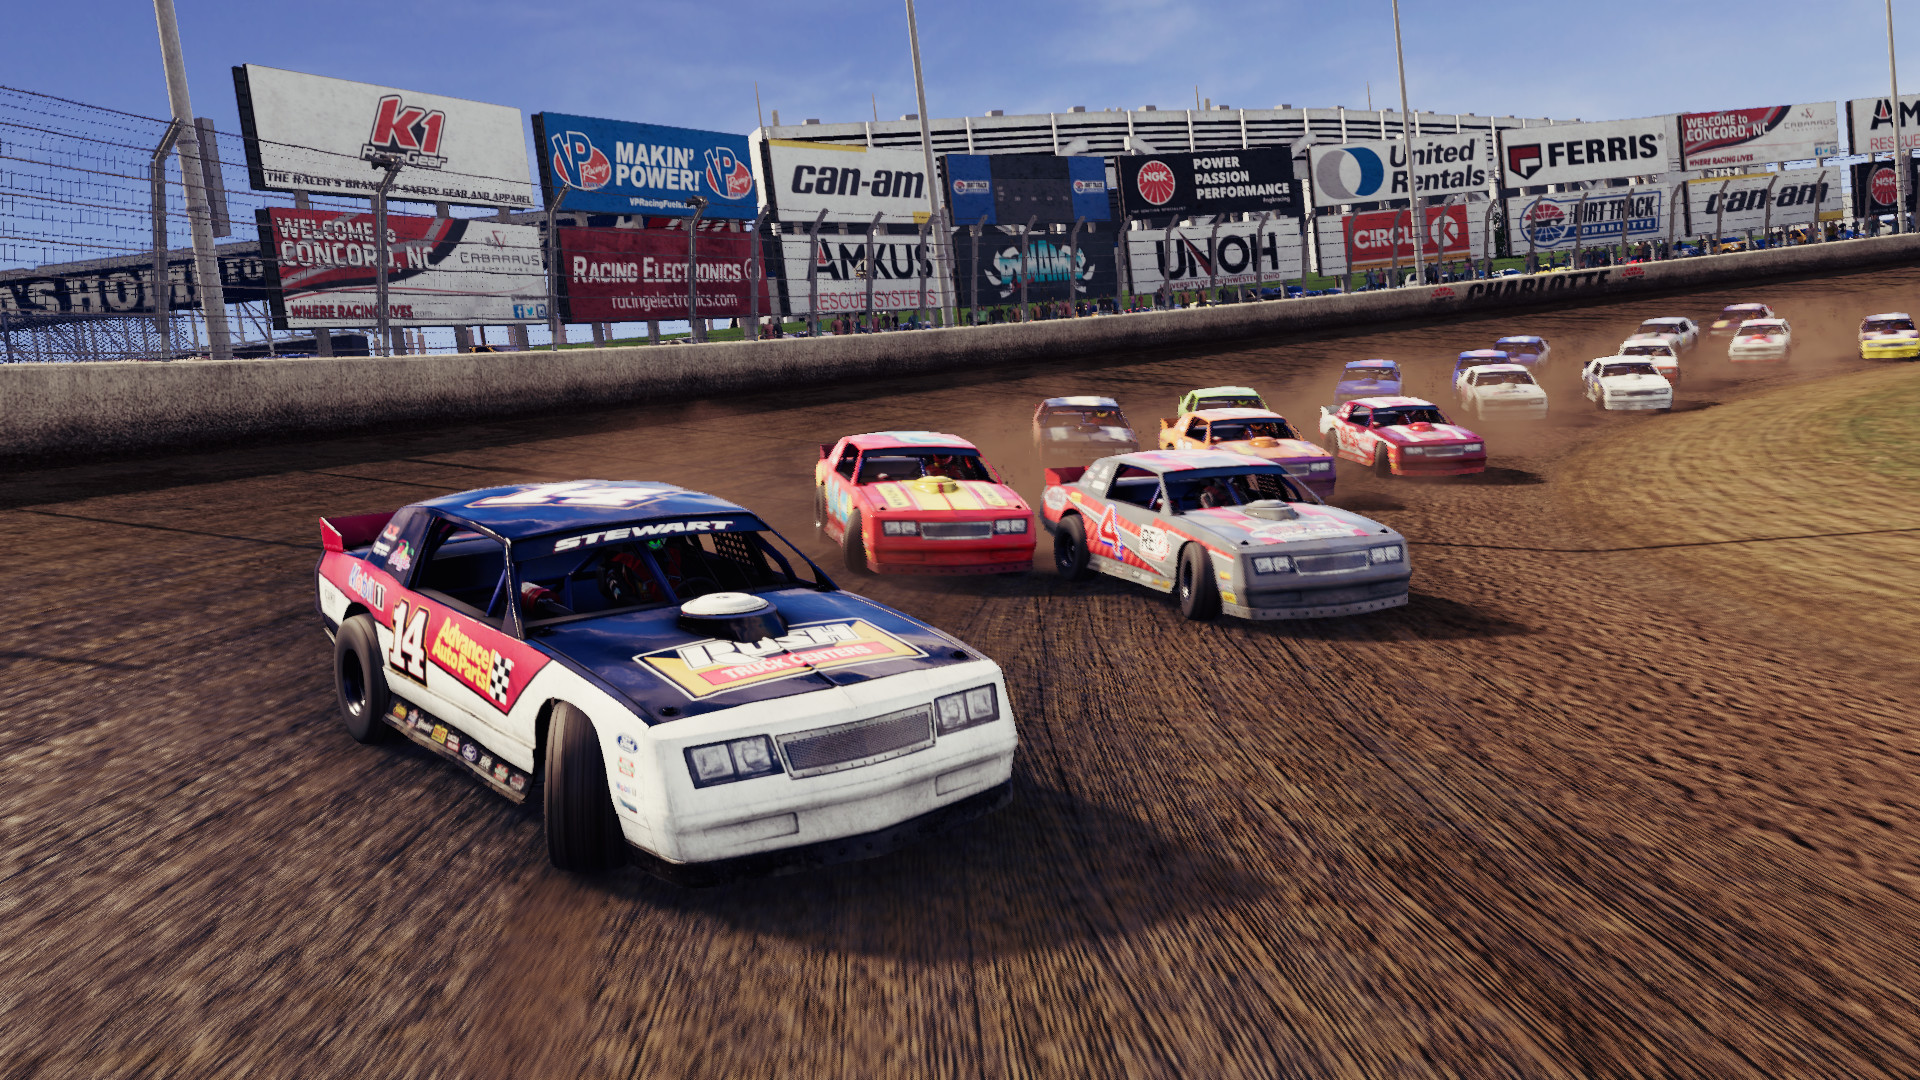 Tony Stewart's All-American Racing: The Dirt Track at Charlotte screenshot